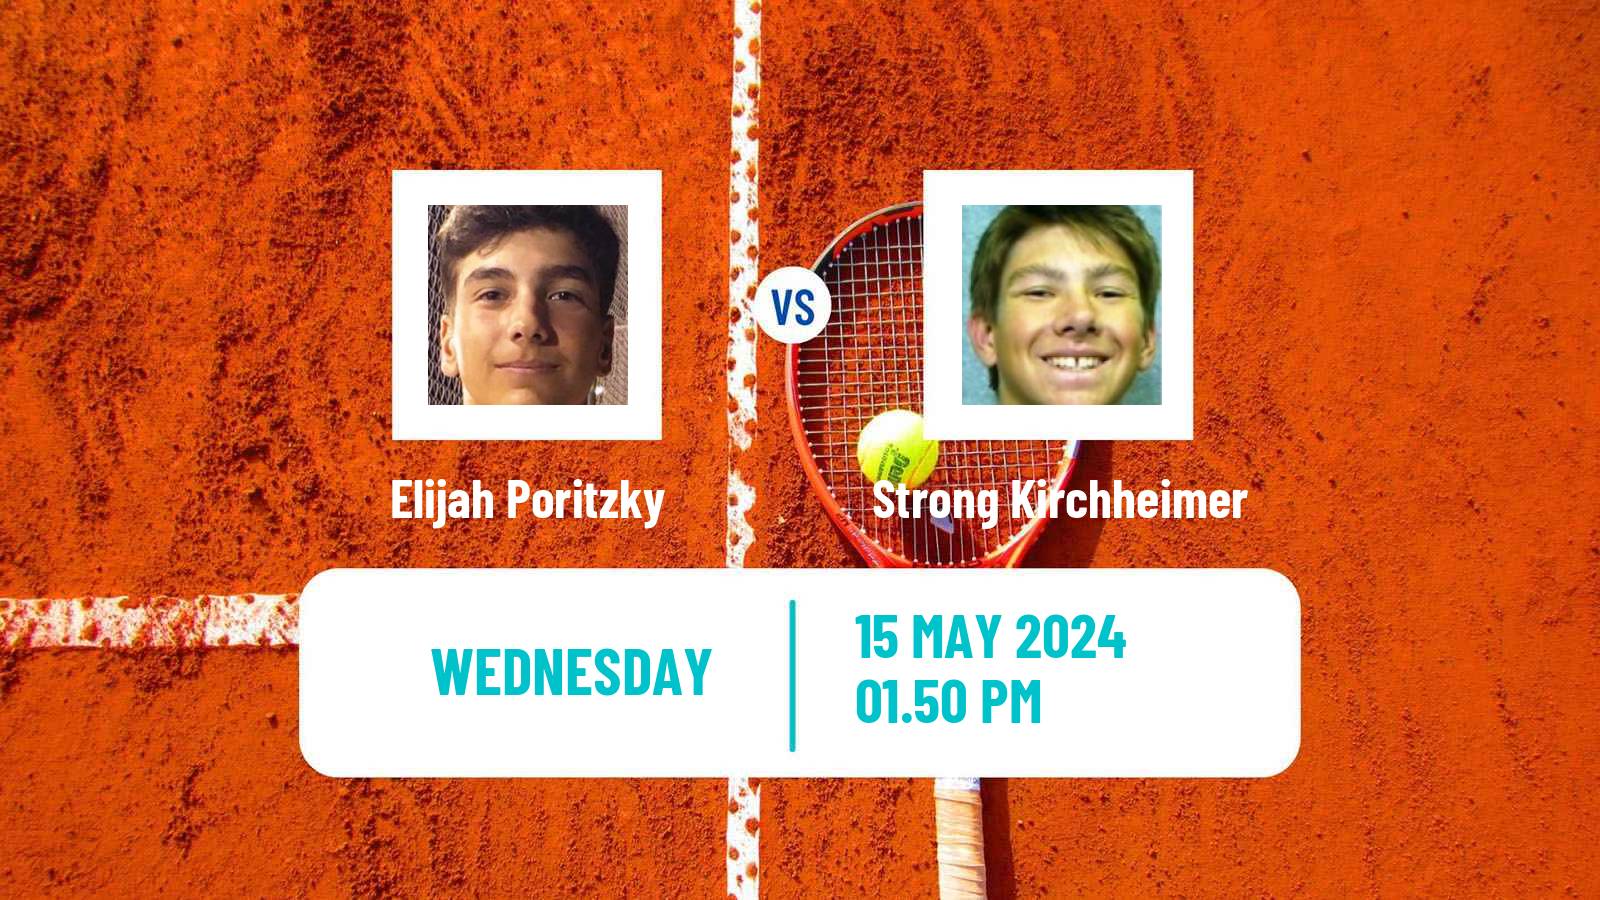 Tennis ITF M25 Pensacola Fl Men Elijah Poritzky - Strong Kirchheimer